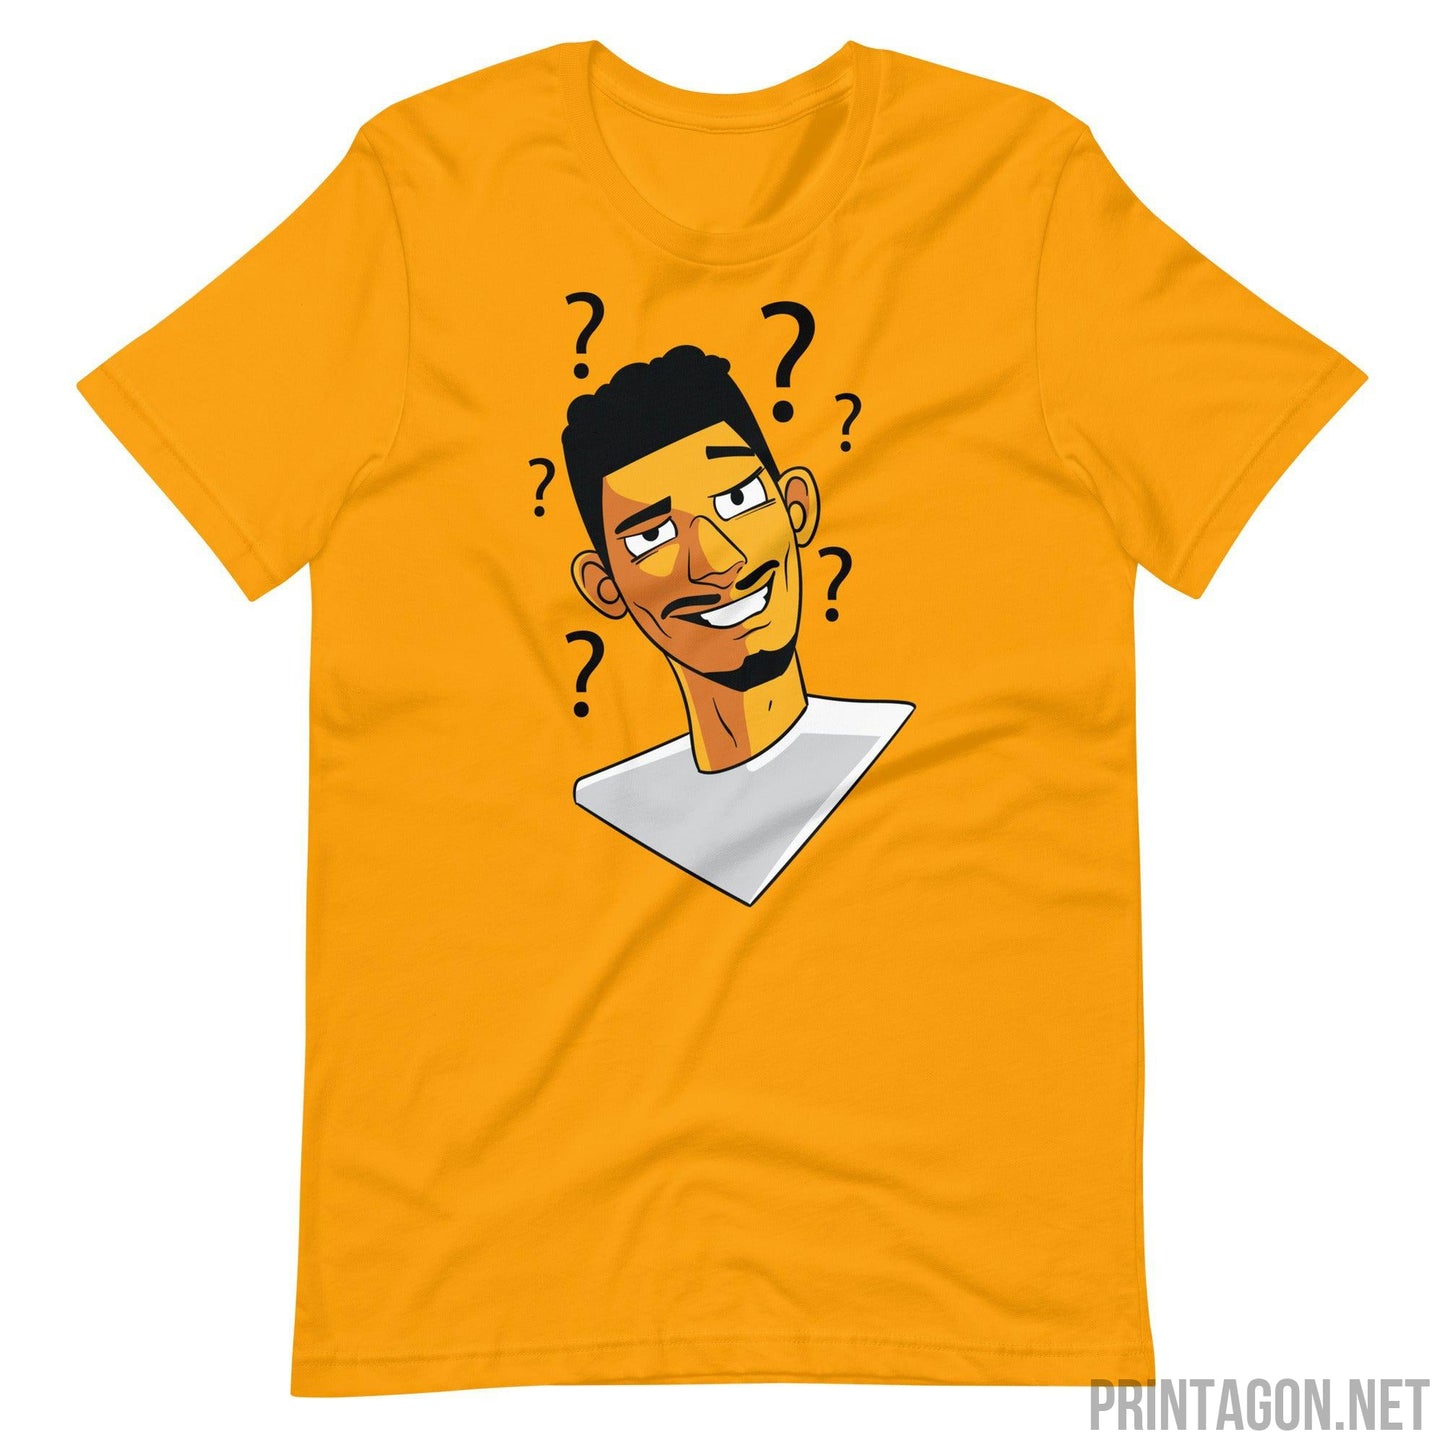 Printagon - Confused Man - Unisex T-shirt - Gold / S